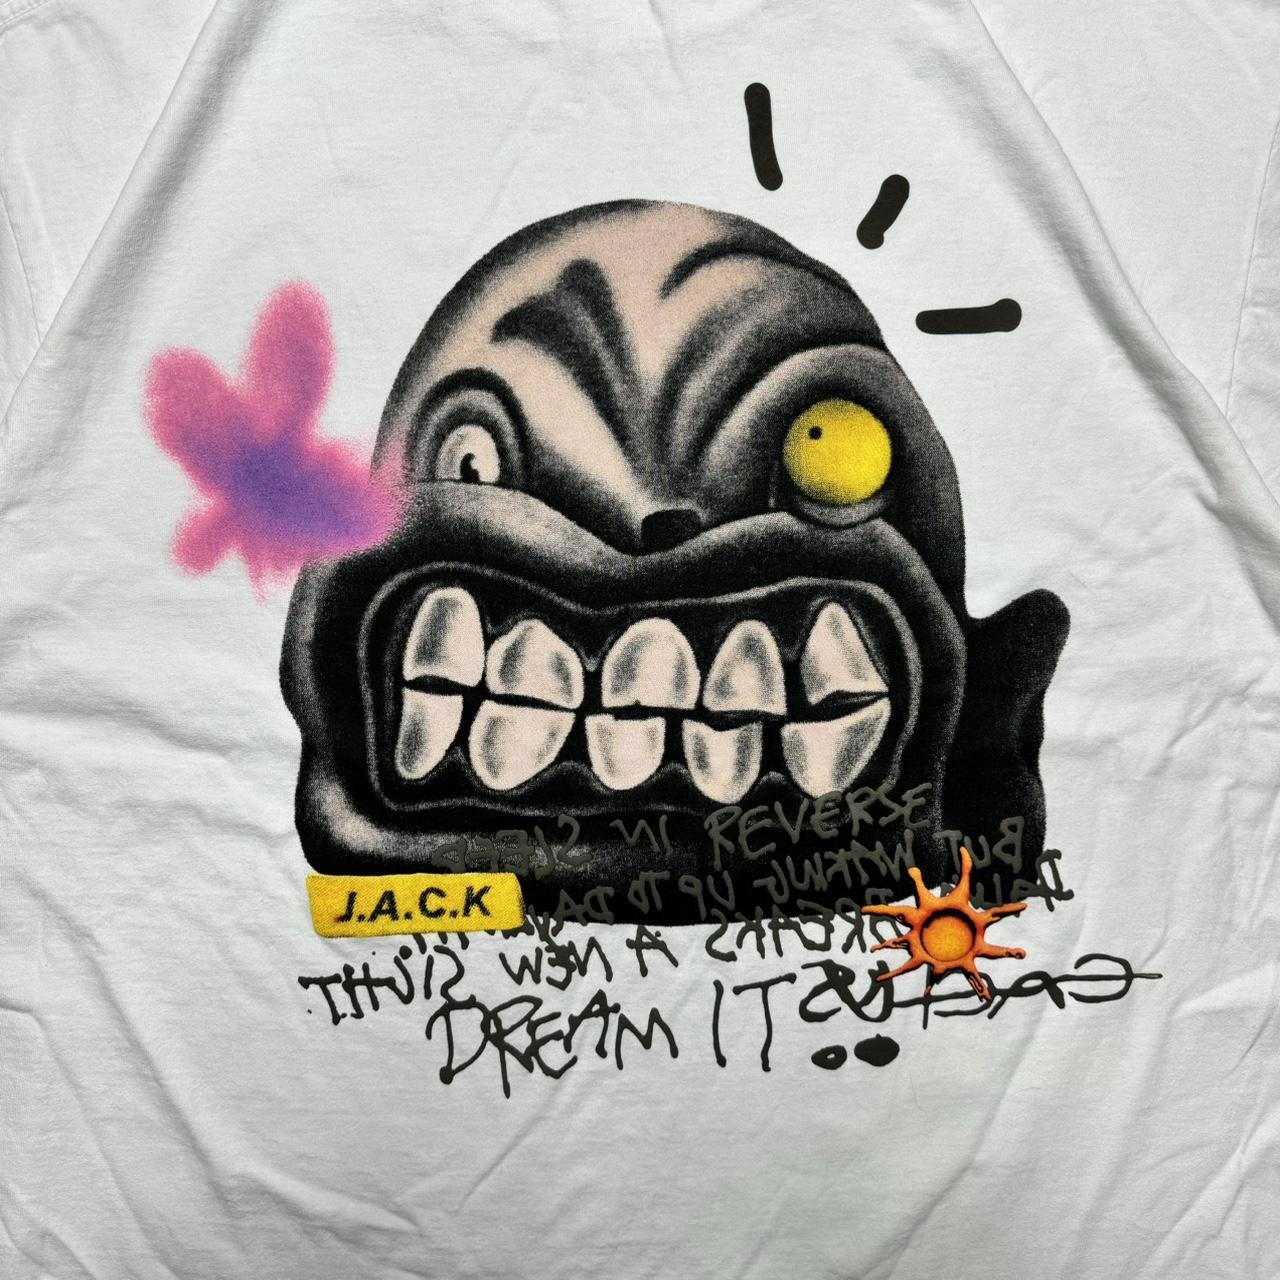 Travis Scott Dream It Cactus Jack Off White T Shirt... - Depop